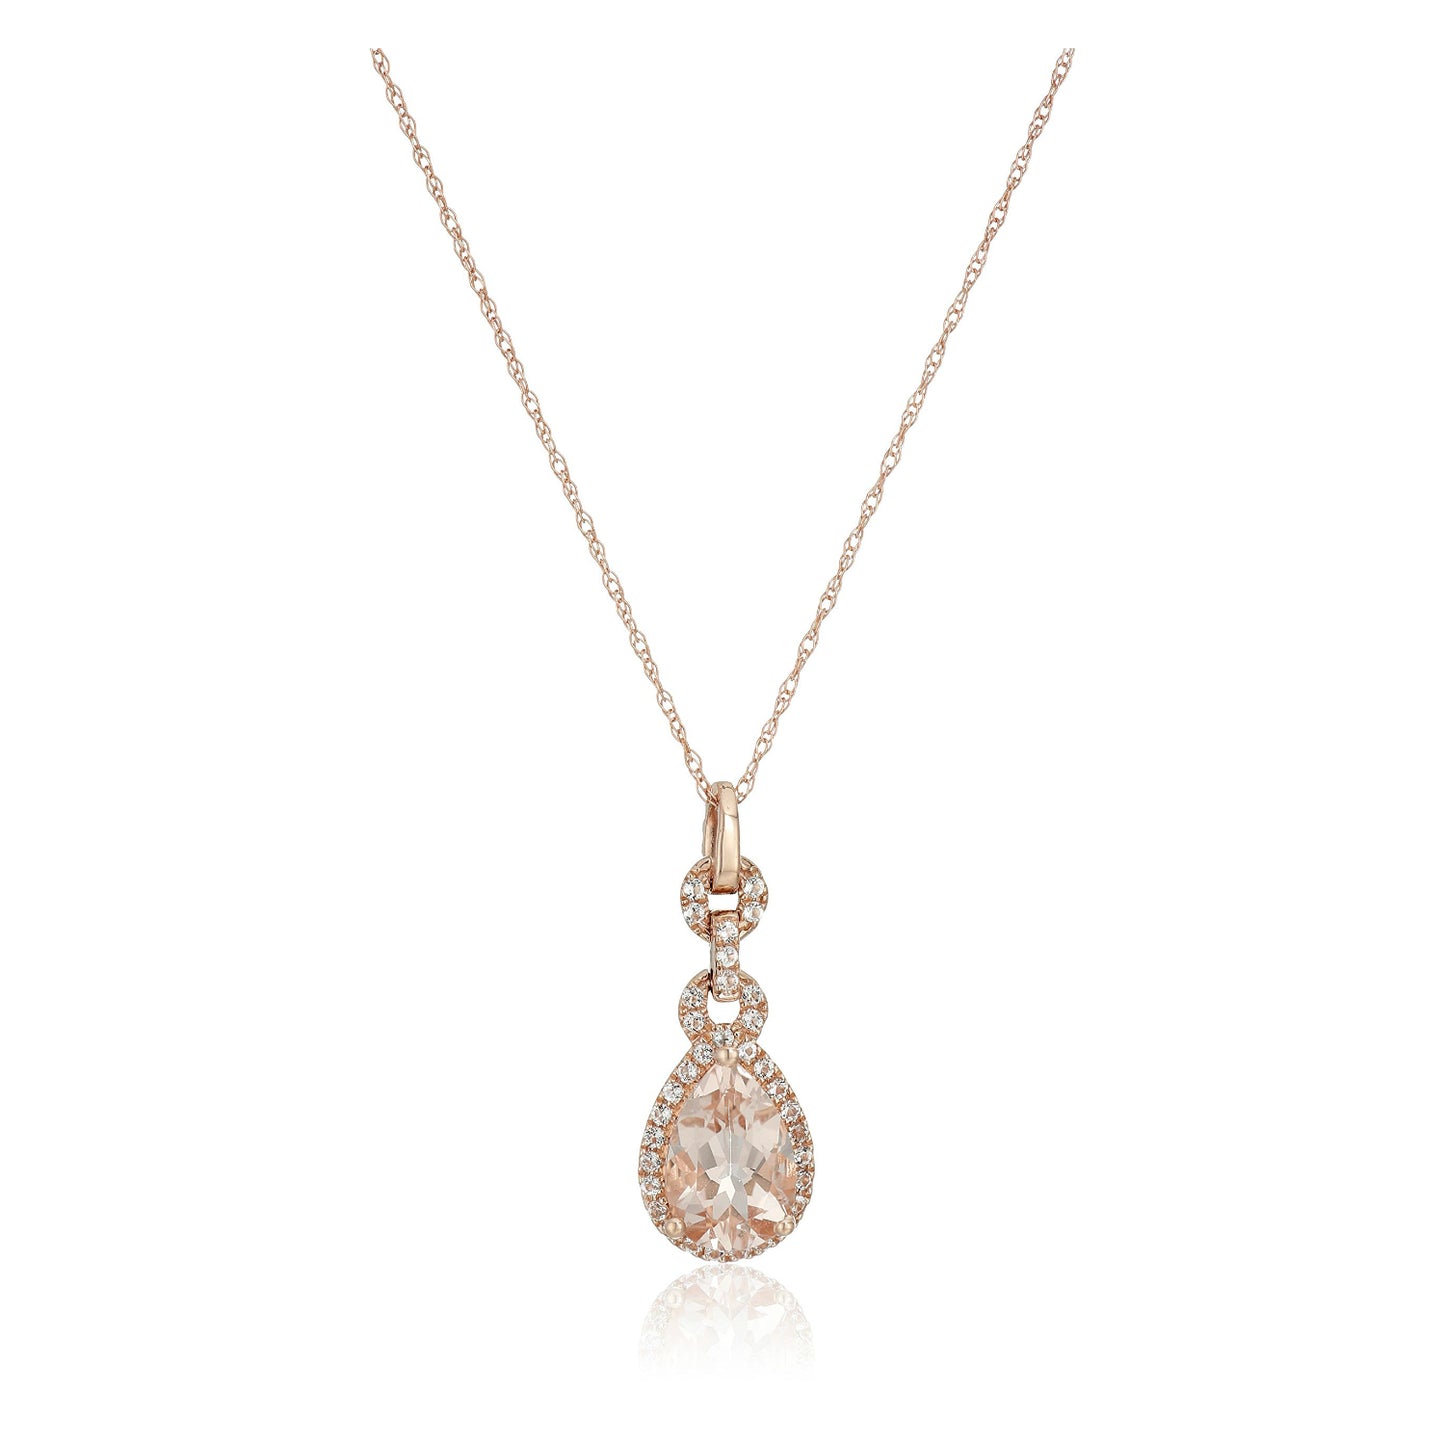 10k Rose Gold Morganite Pear-shape Pendant Necklace, 18" - Pink - Pinctore